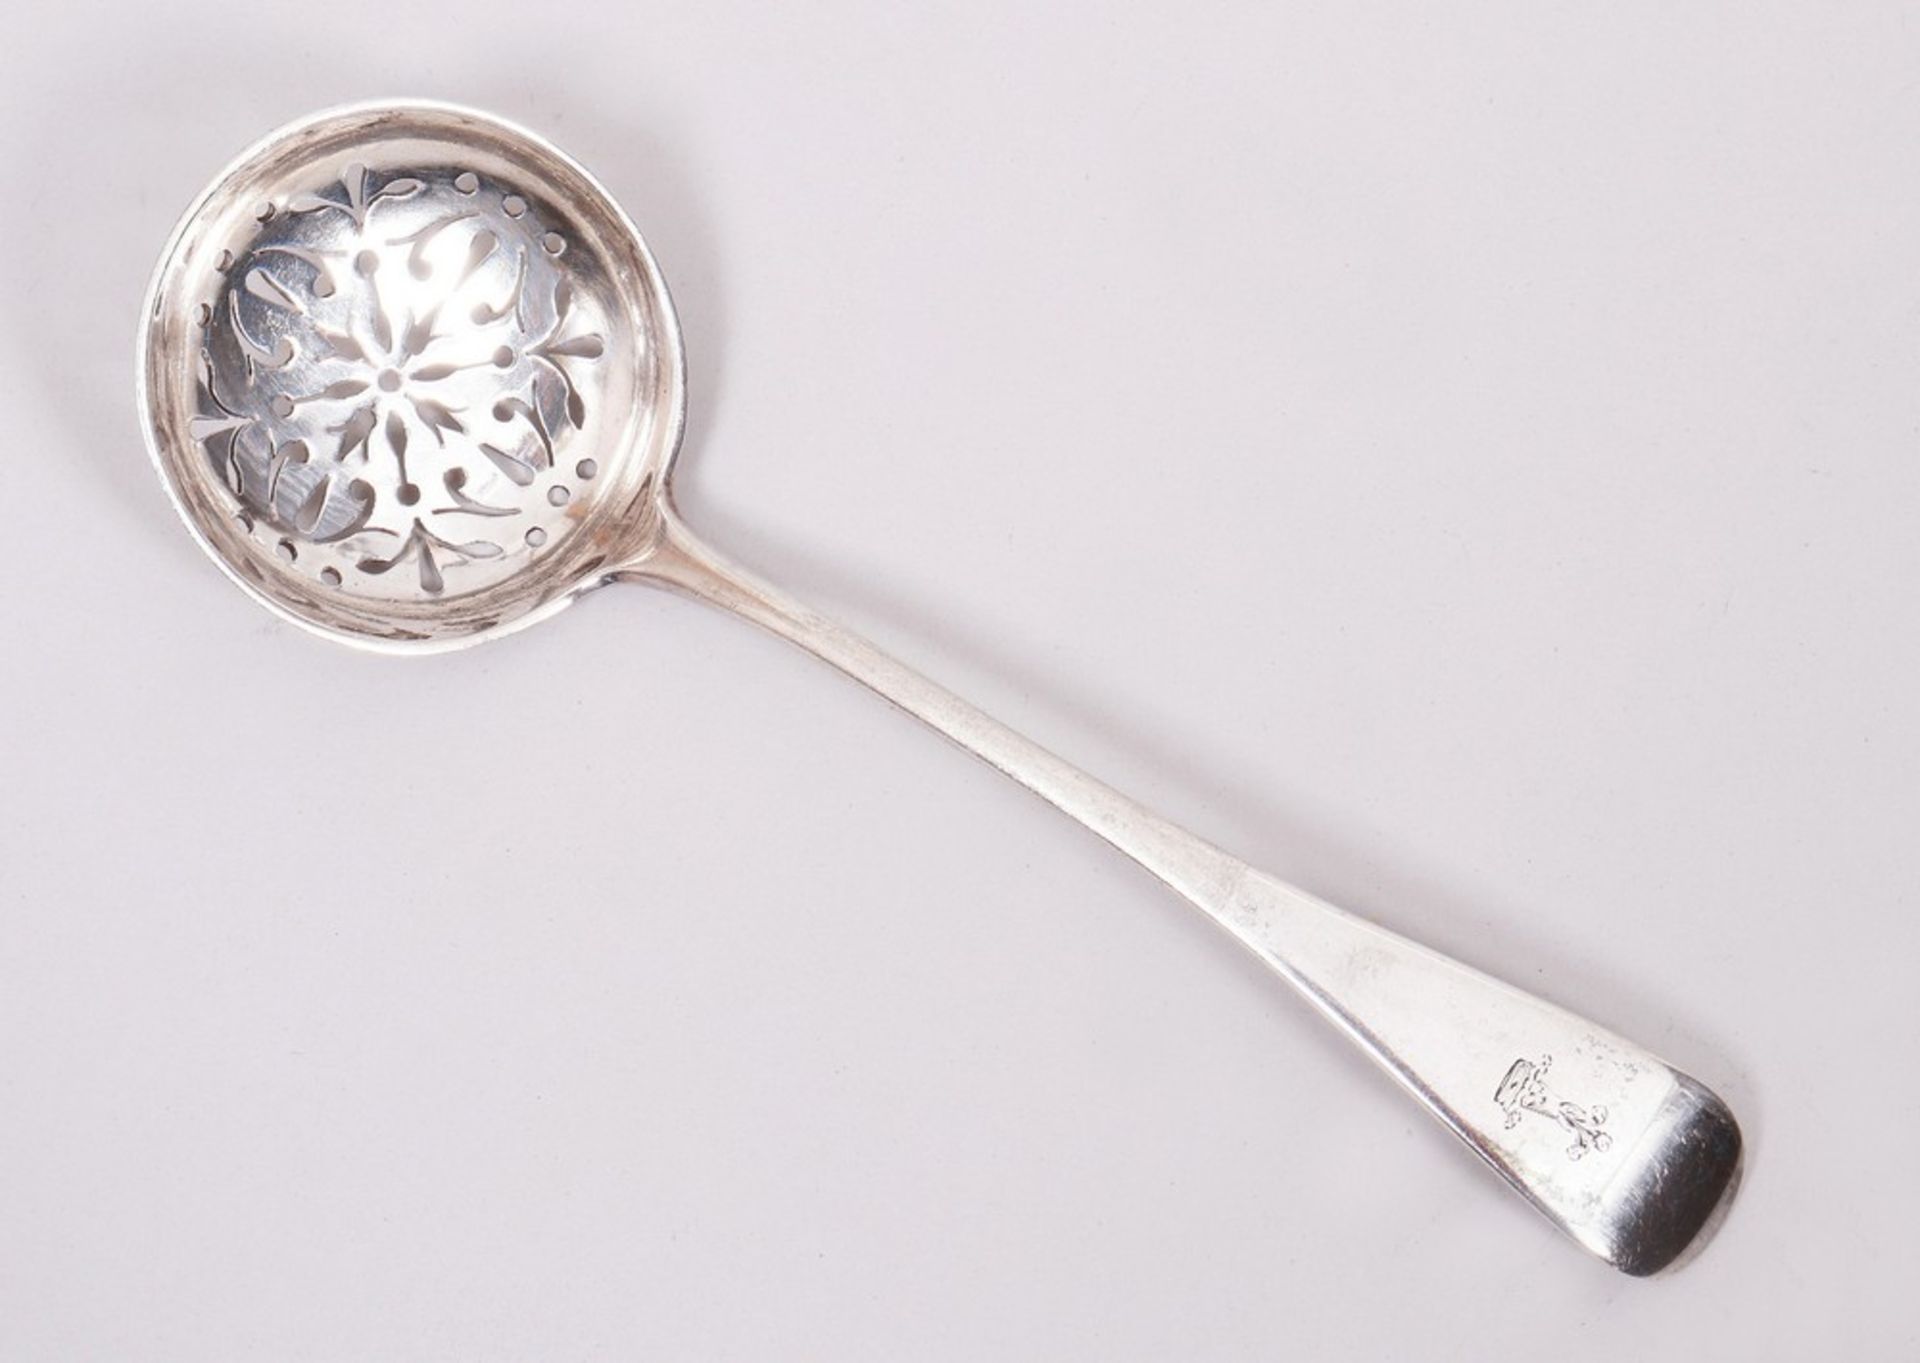 Sifting spoon, 925 silver, Charles Boyton, London, c. 1895